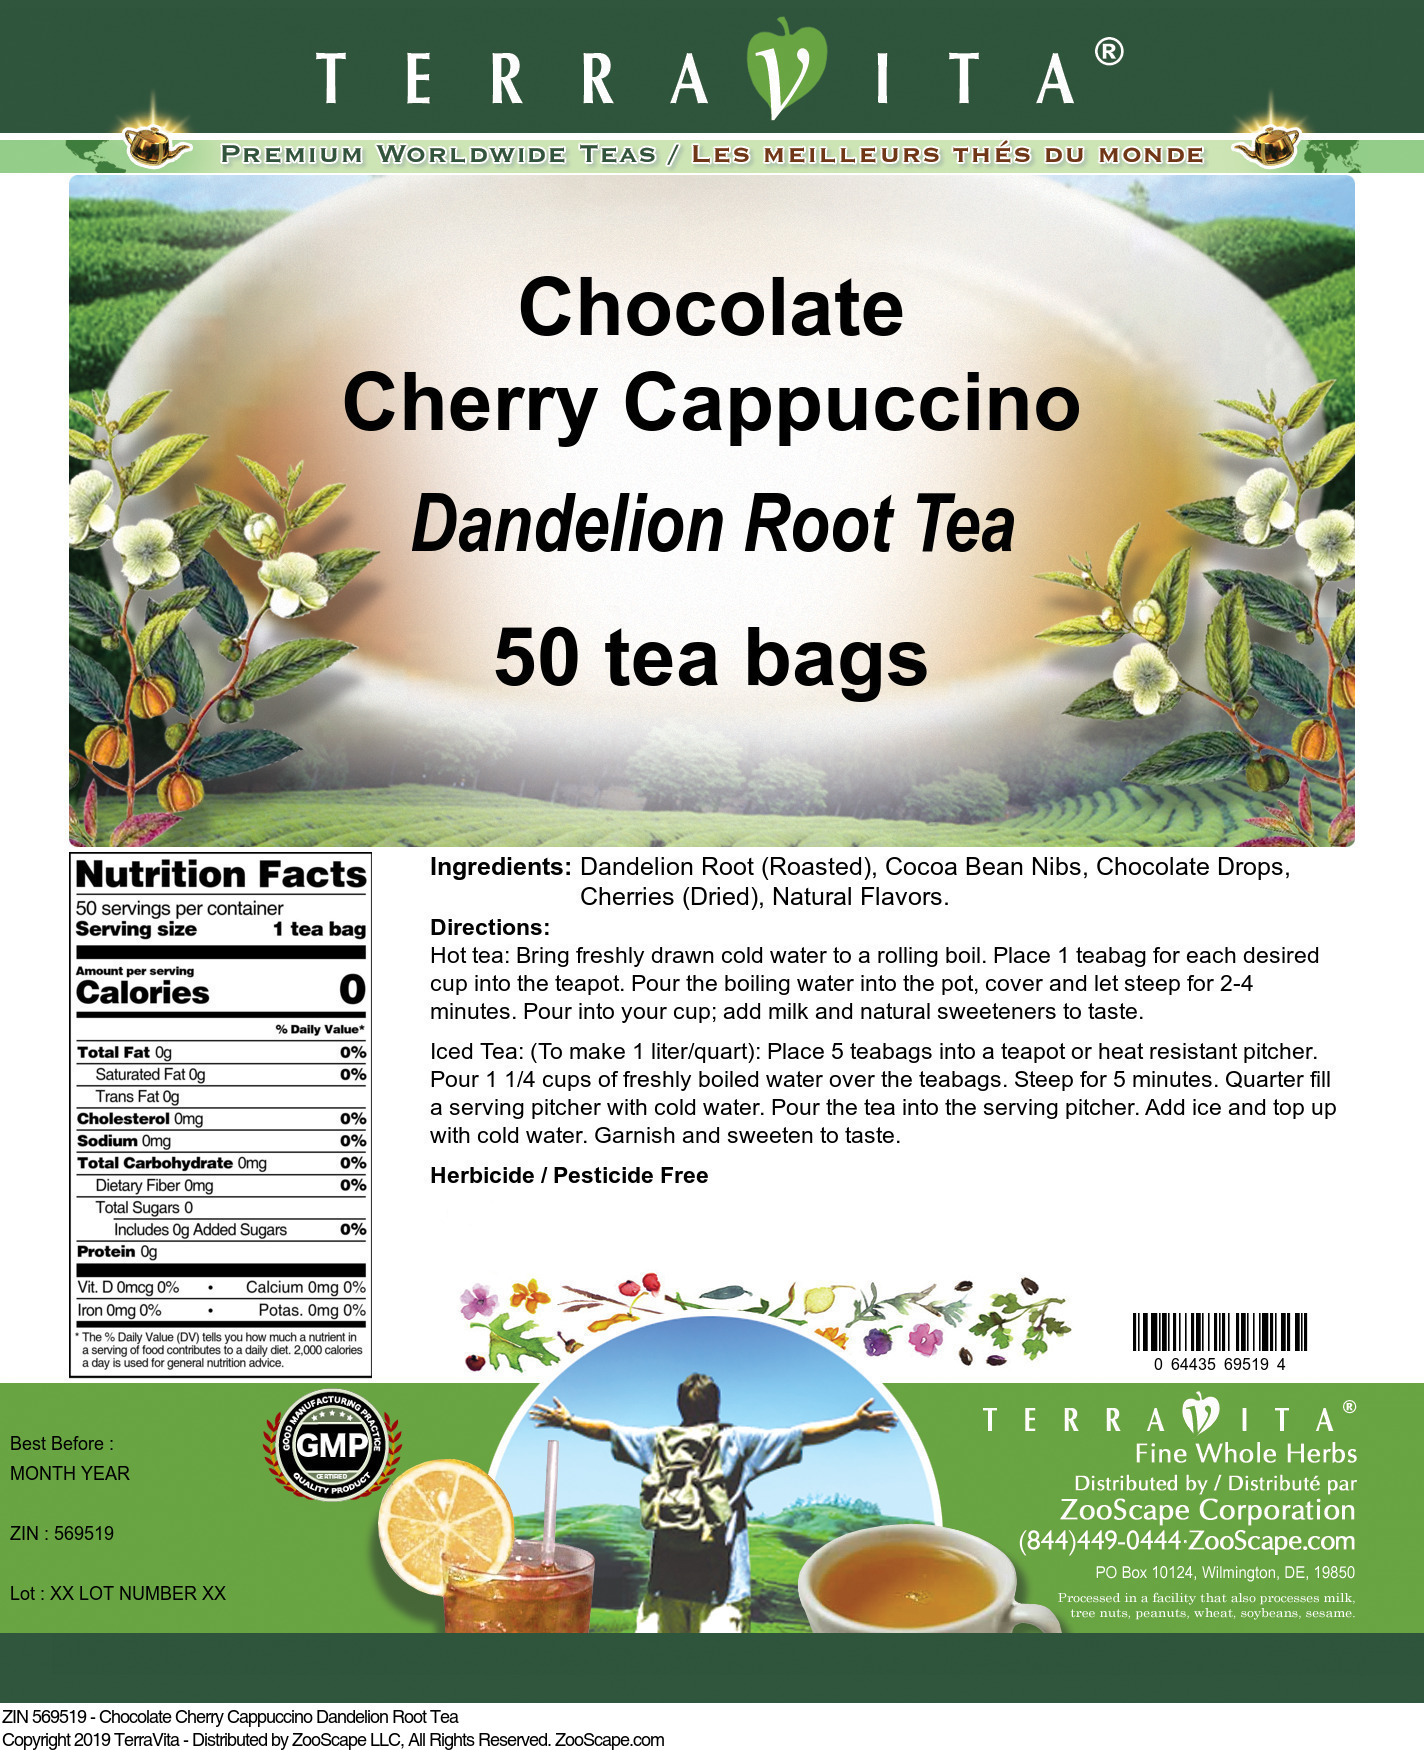 Chocolate Cherry Cappuccino Dandelion Root Tea - Label